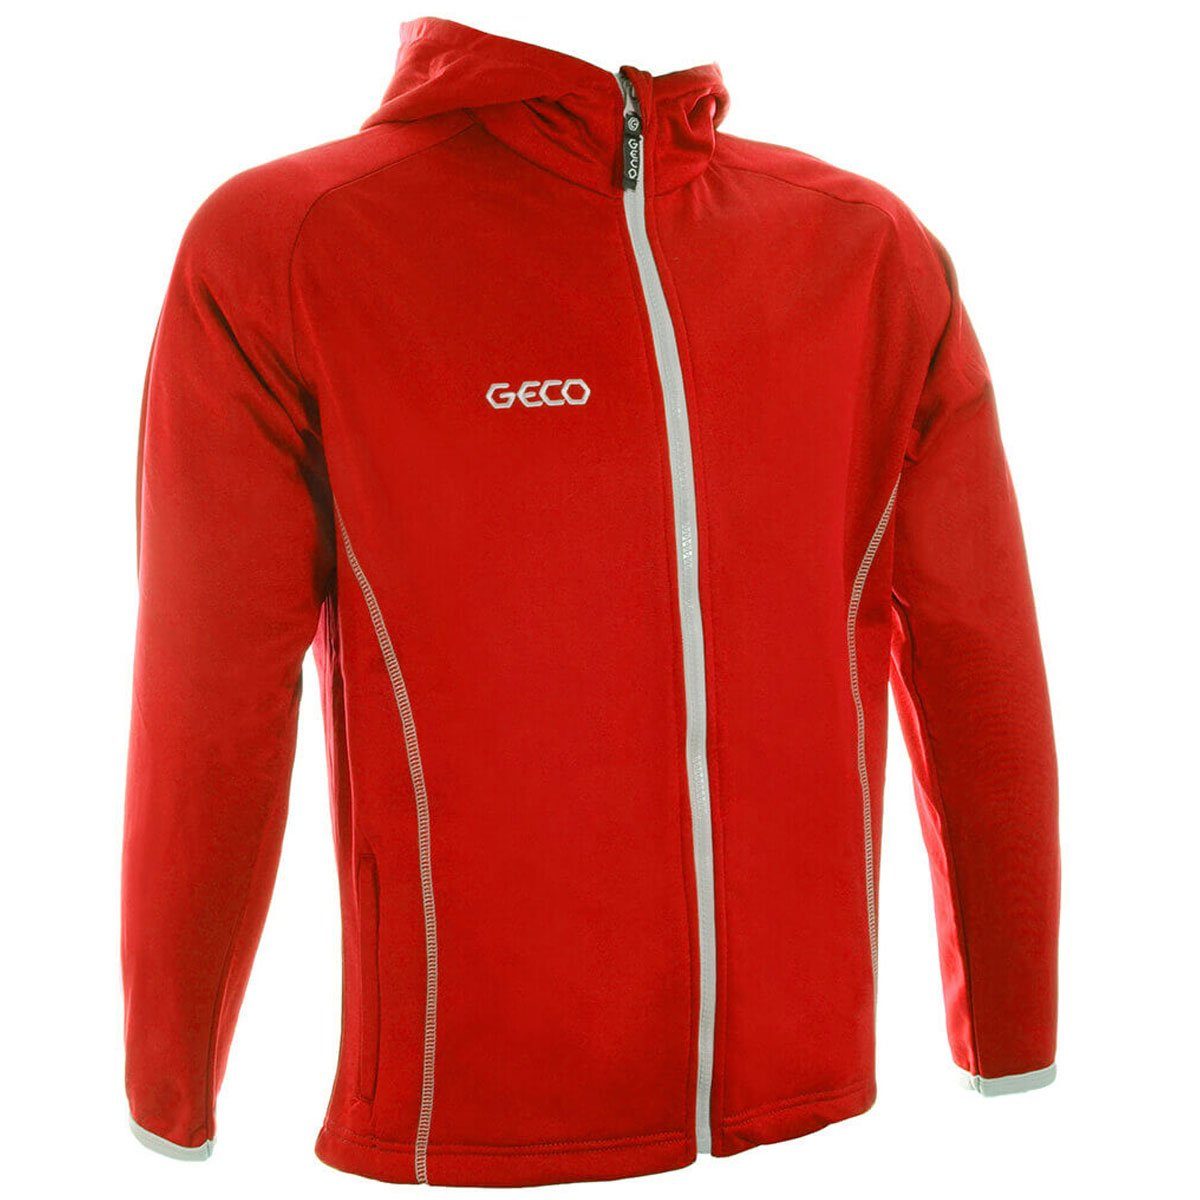 Fußball Trainingsjacke Trainingsjacke Geco Kapuze Präsentationsjacke Hurrican rot mit Geco Sportswear